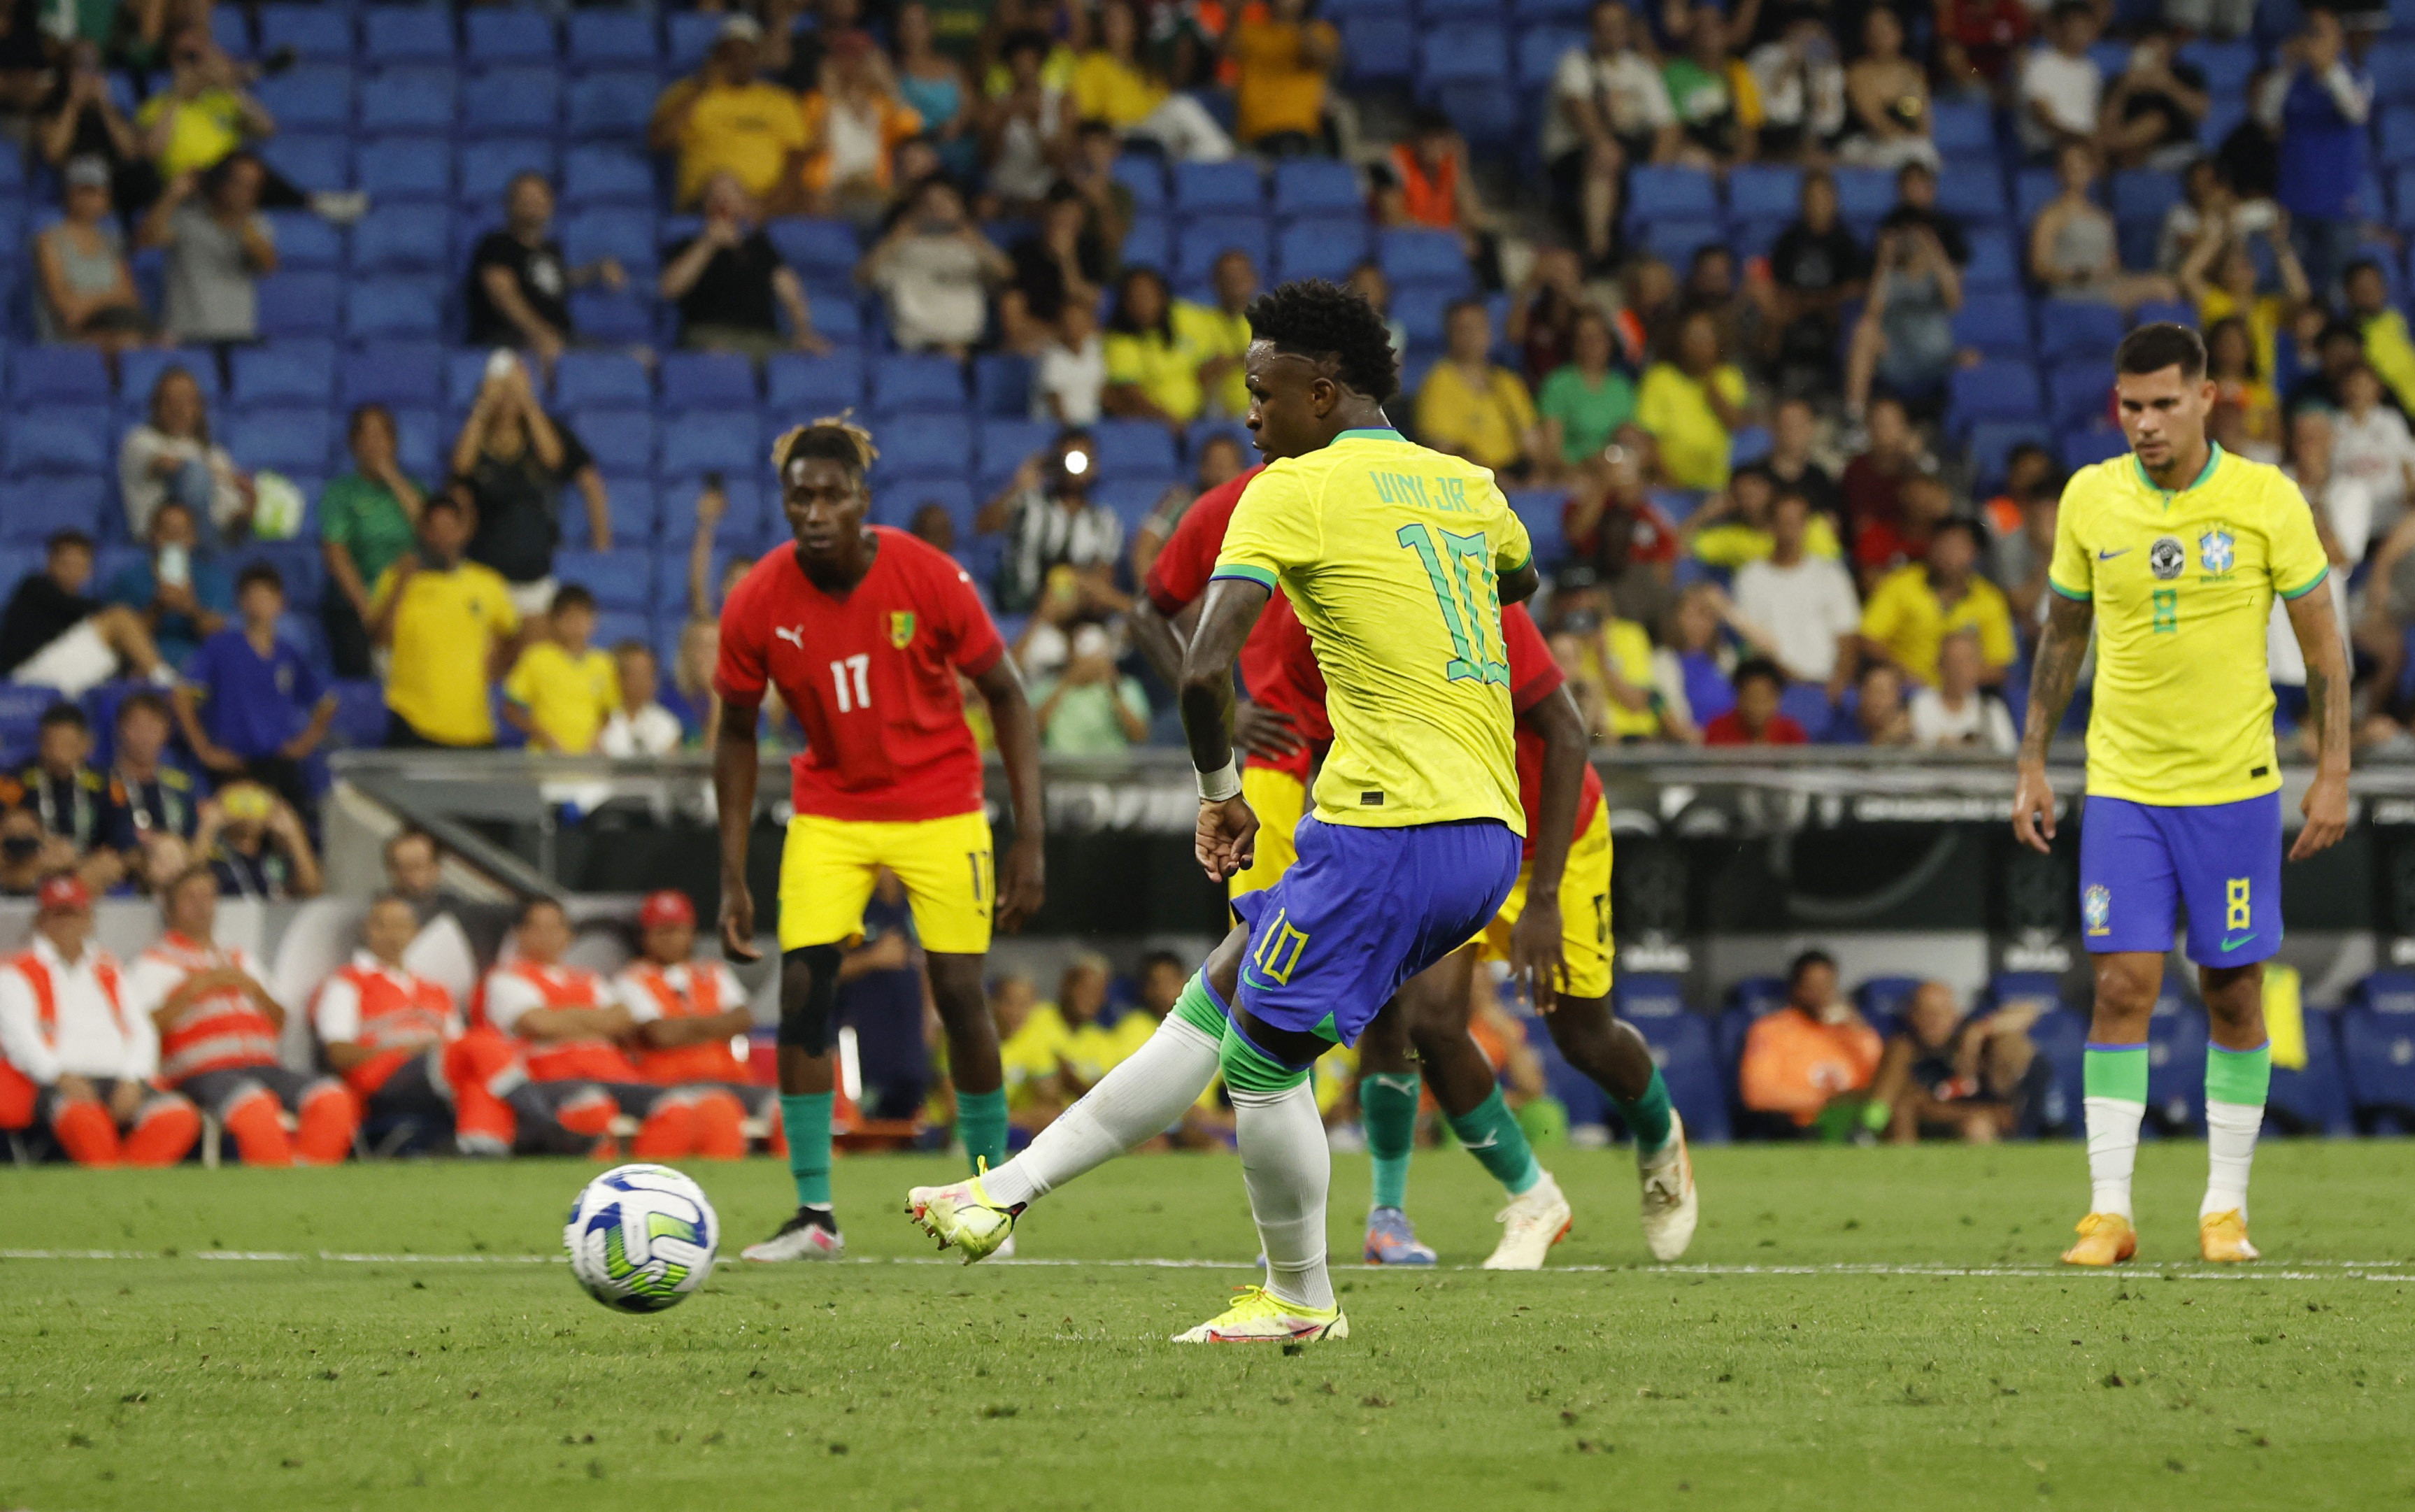 Brazil's older players should step up: Danilo